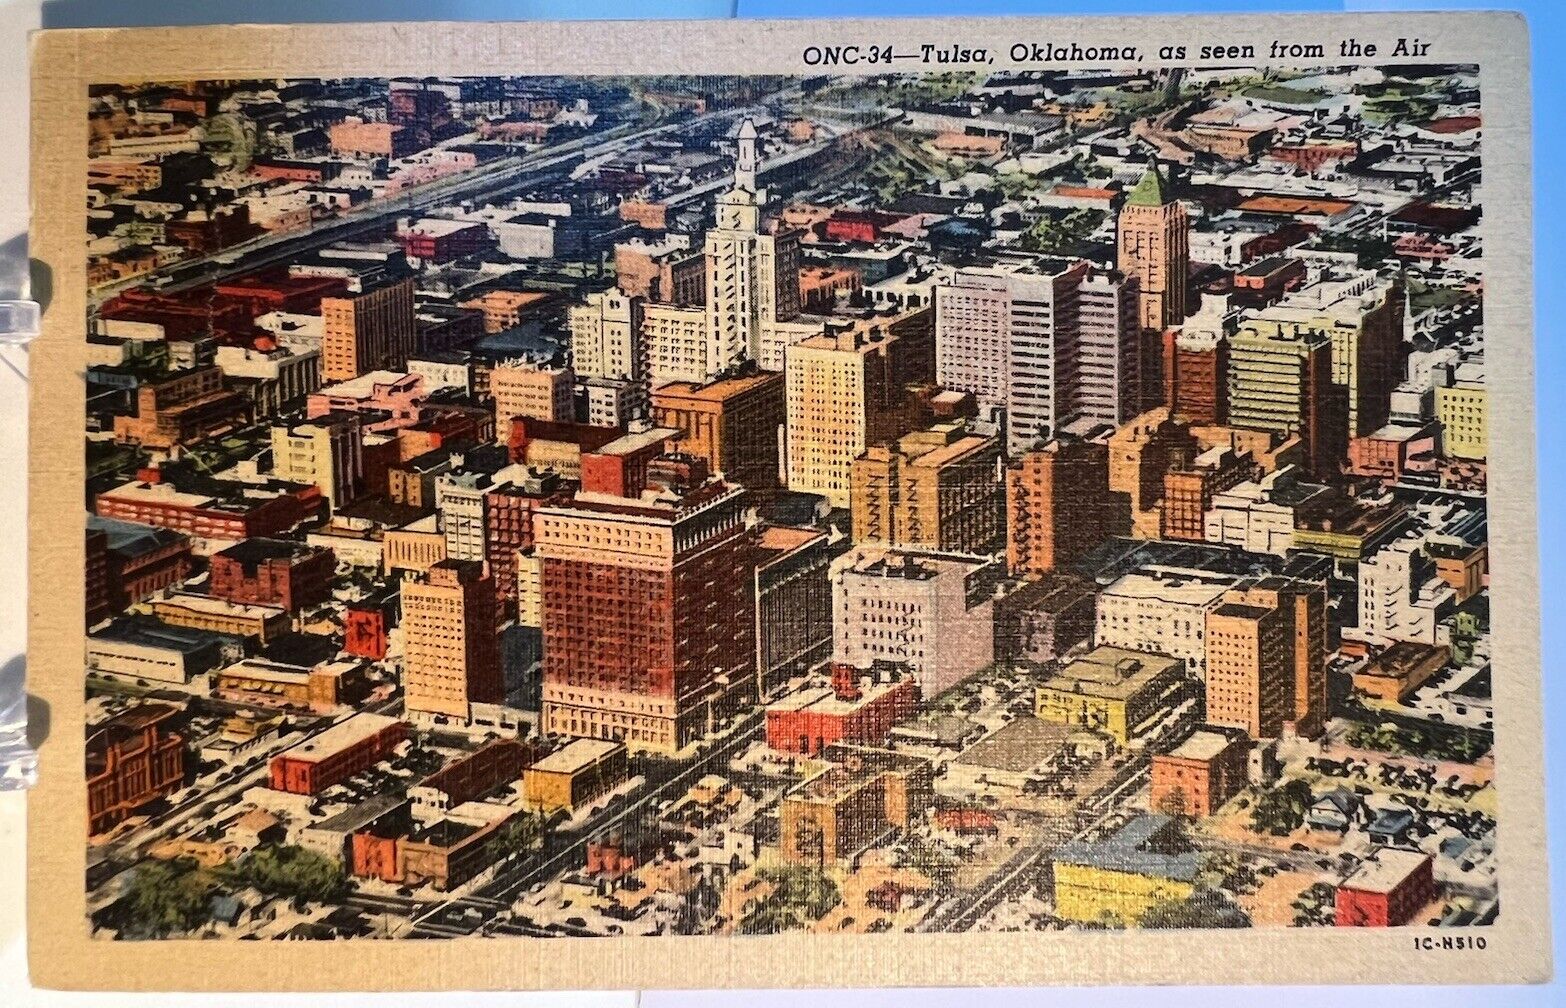 TULSA, OKLAHOMA as Seen from the Air - Vintage Postcard